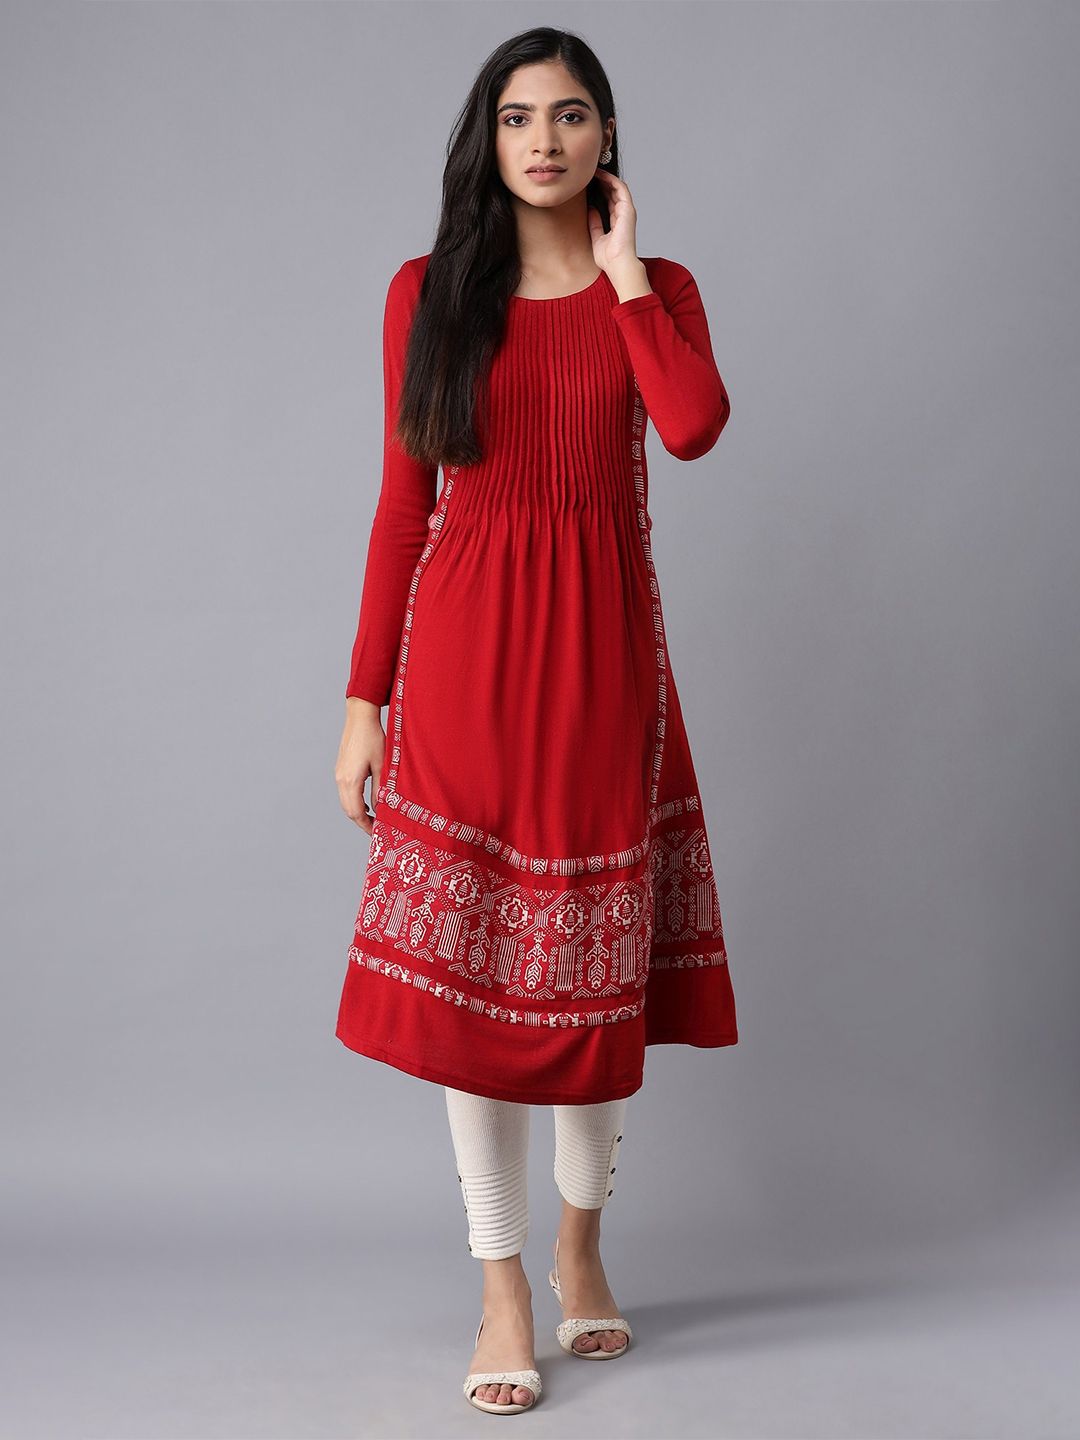 W Red Ethnic Motifs A-Line Midi Dress Price in India